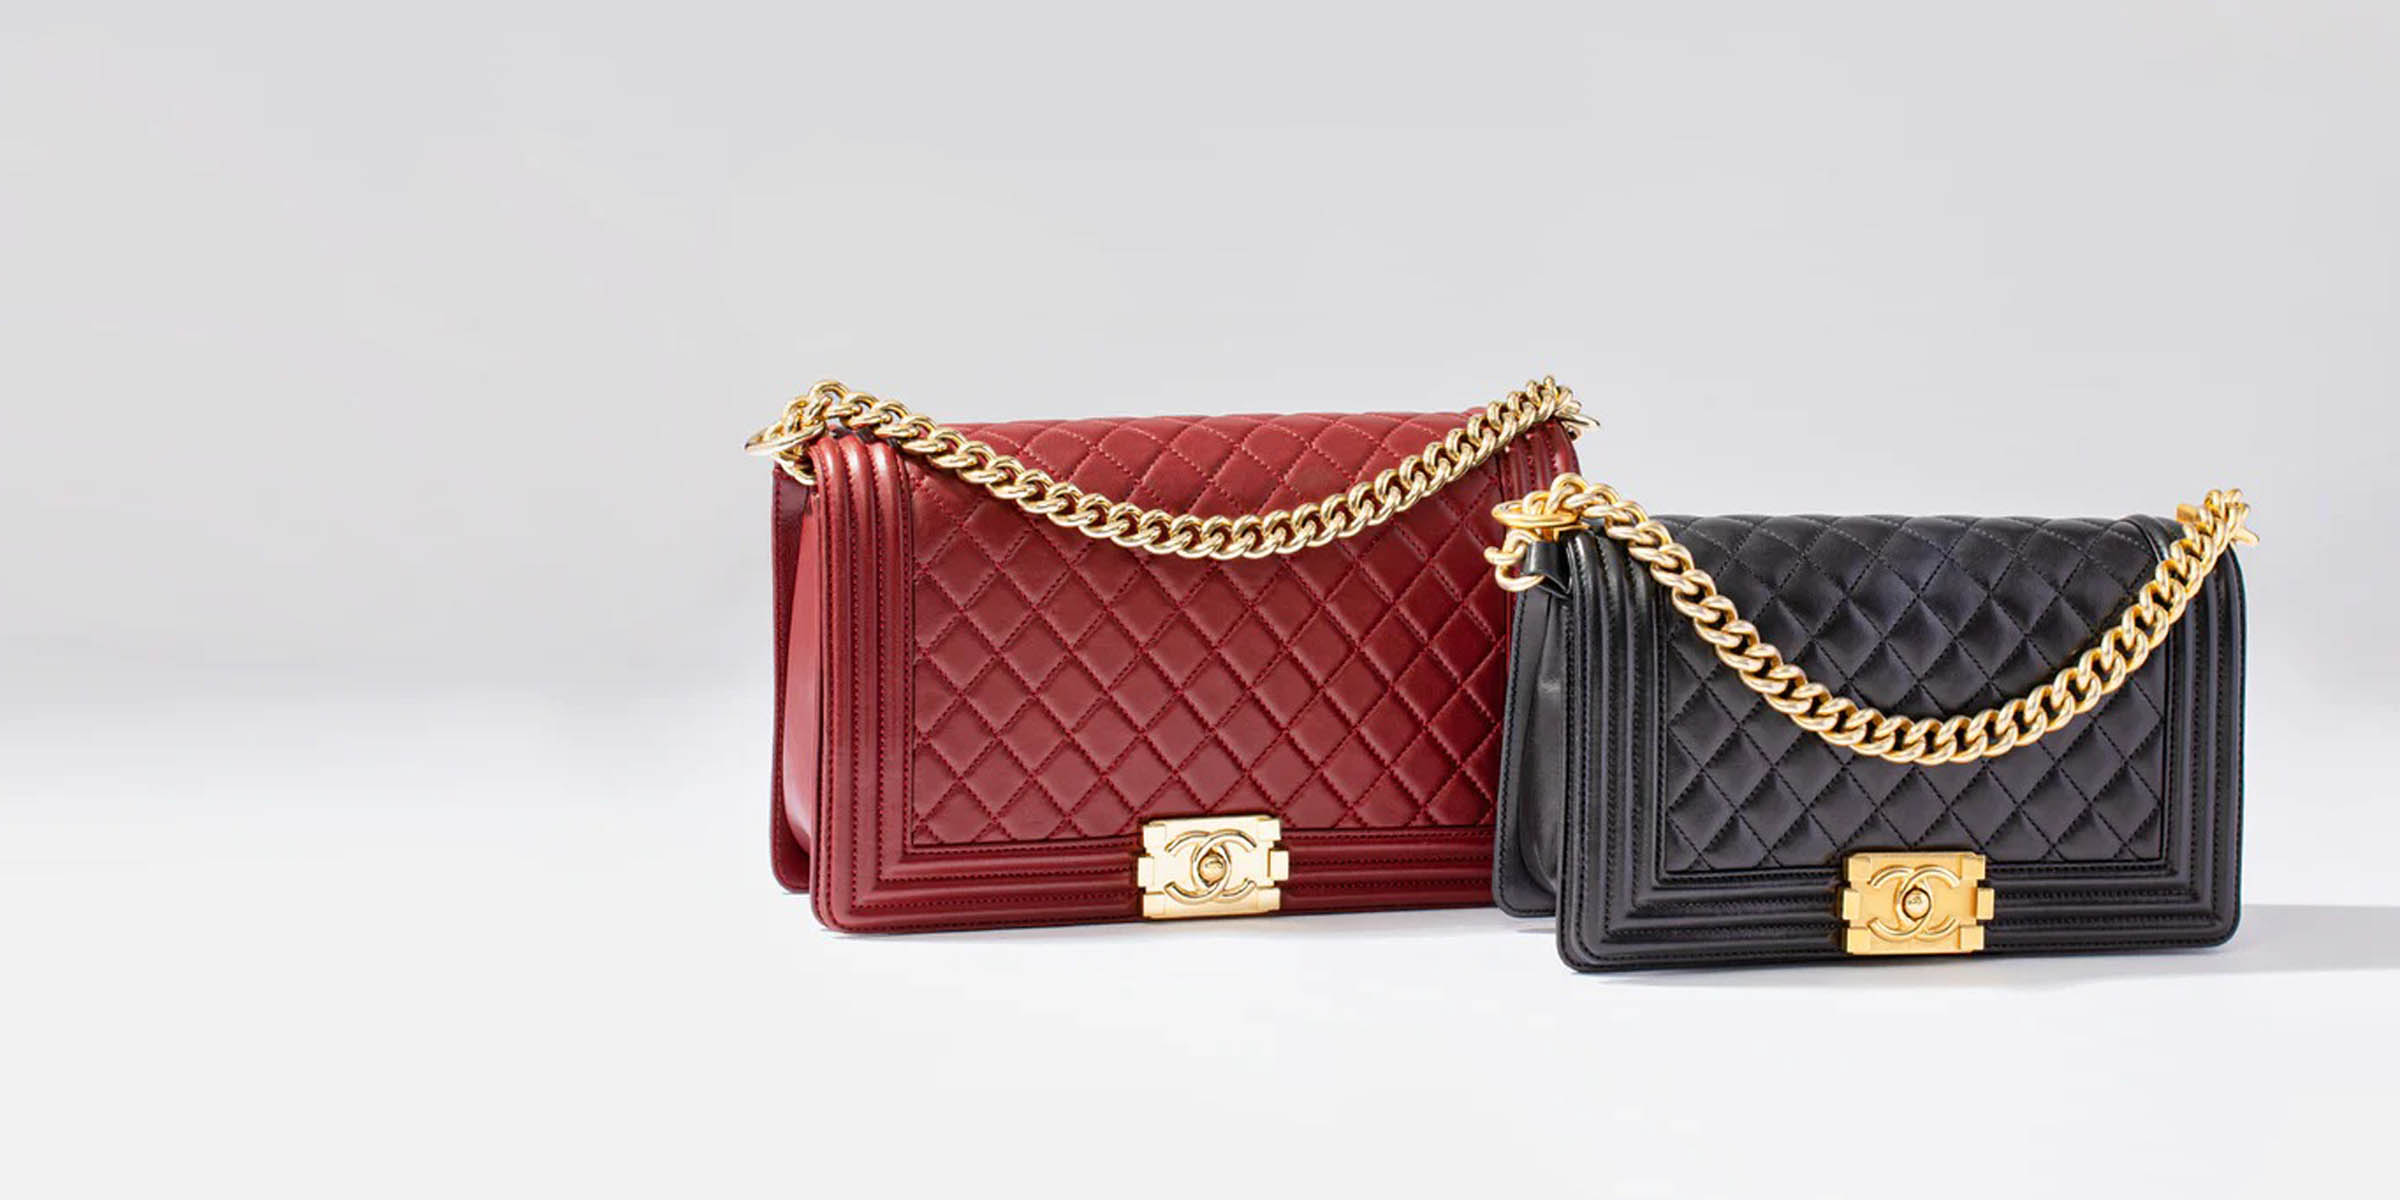 15 reasons to buy a Chanel handbag